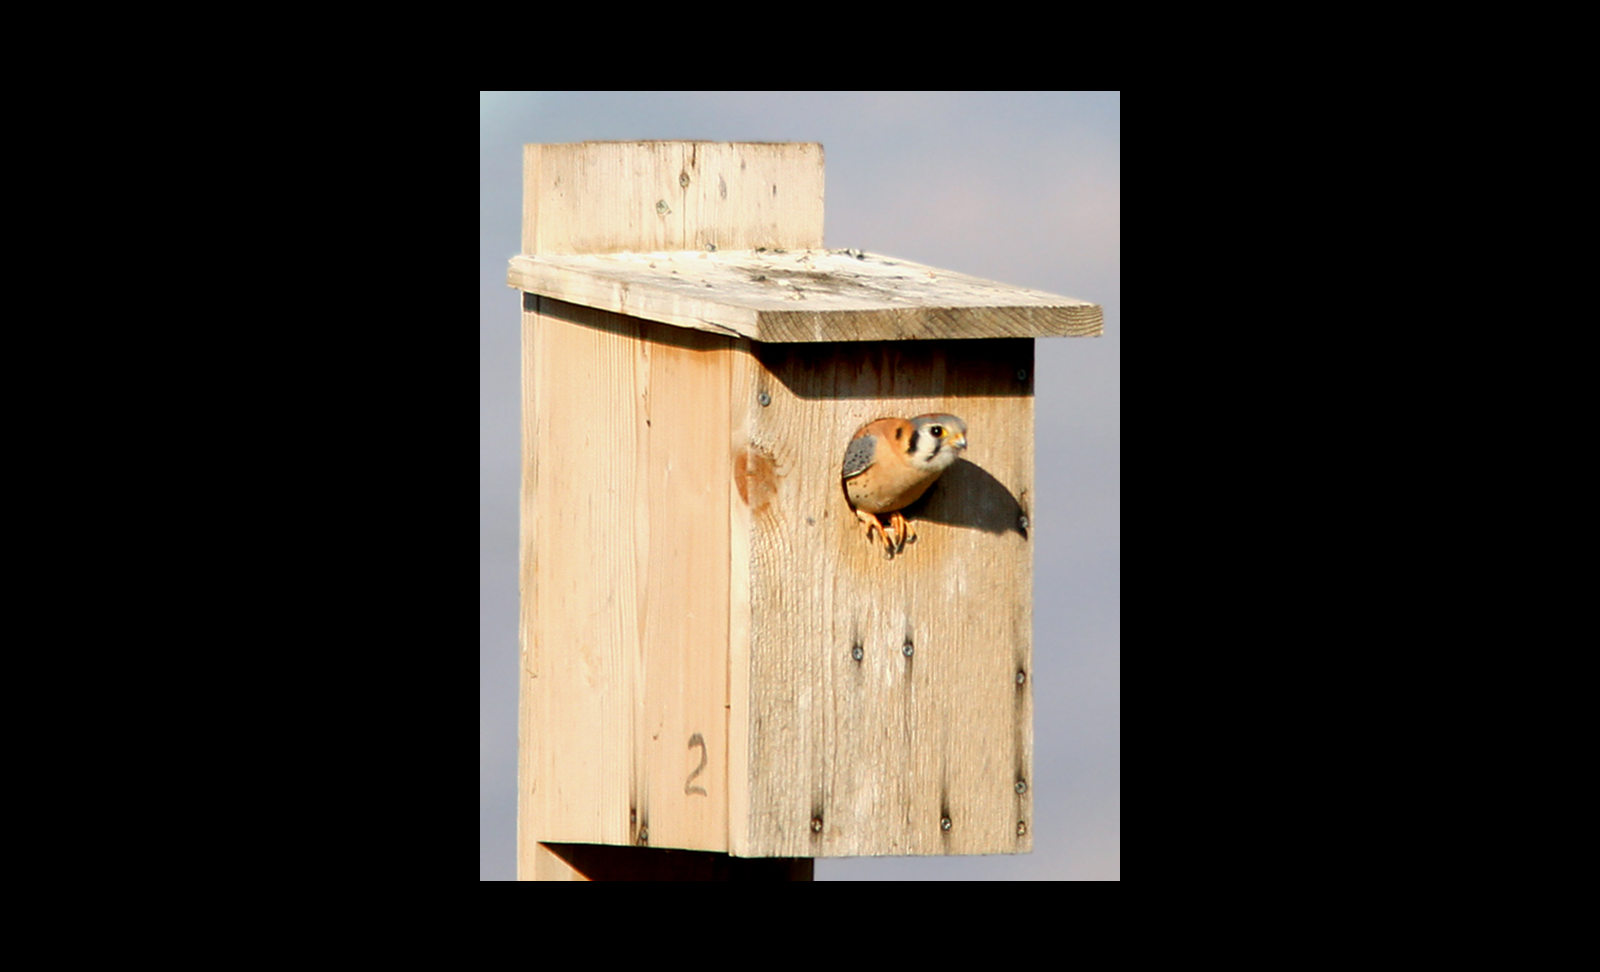 A kestrel sitting in birdhouse